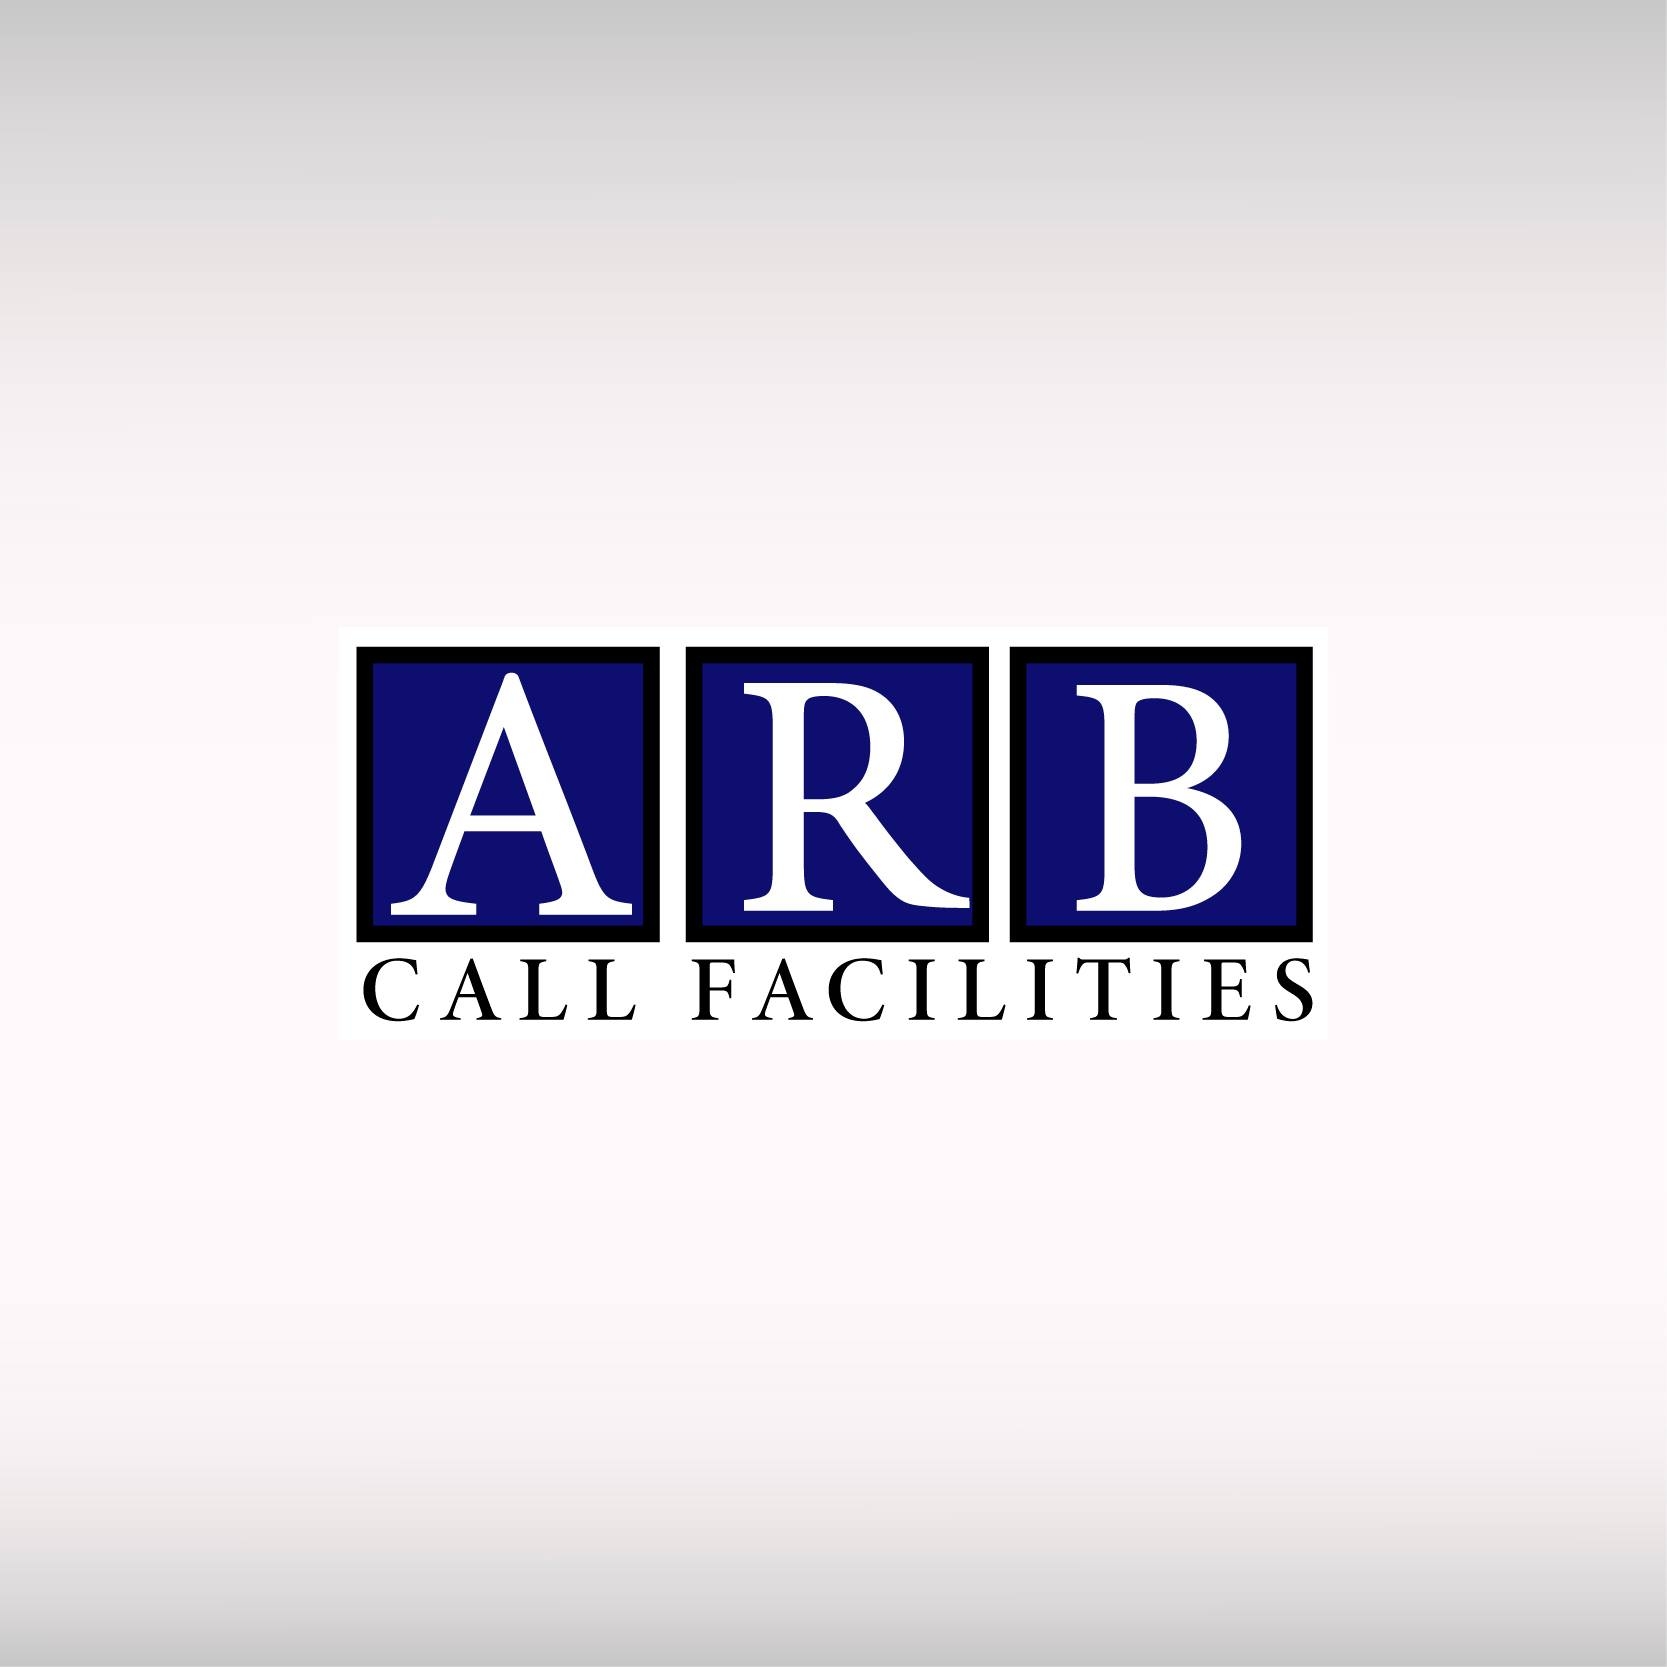 ARB Call Facilities